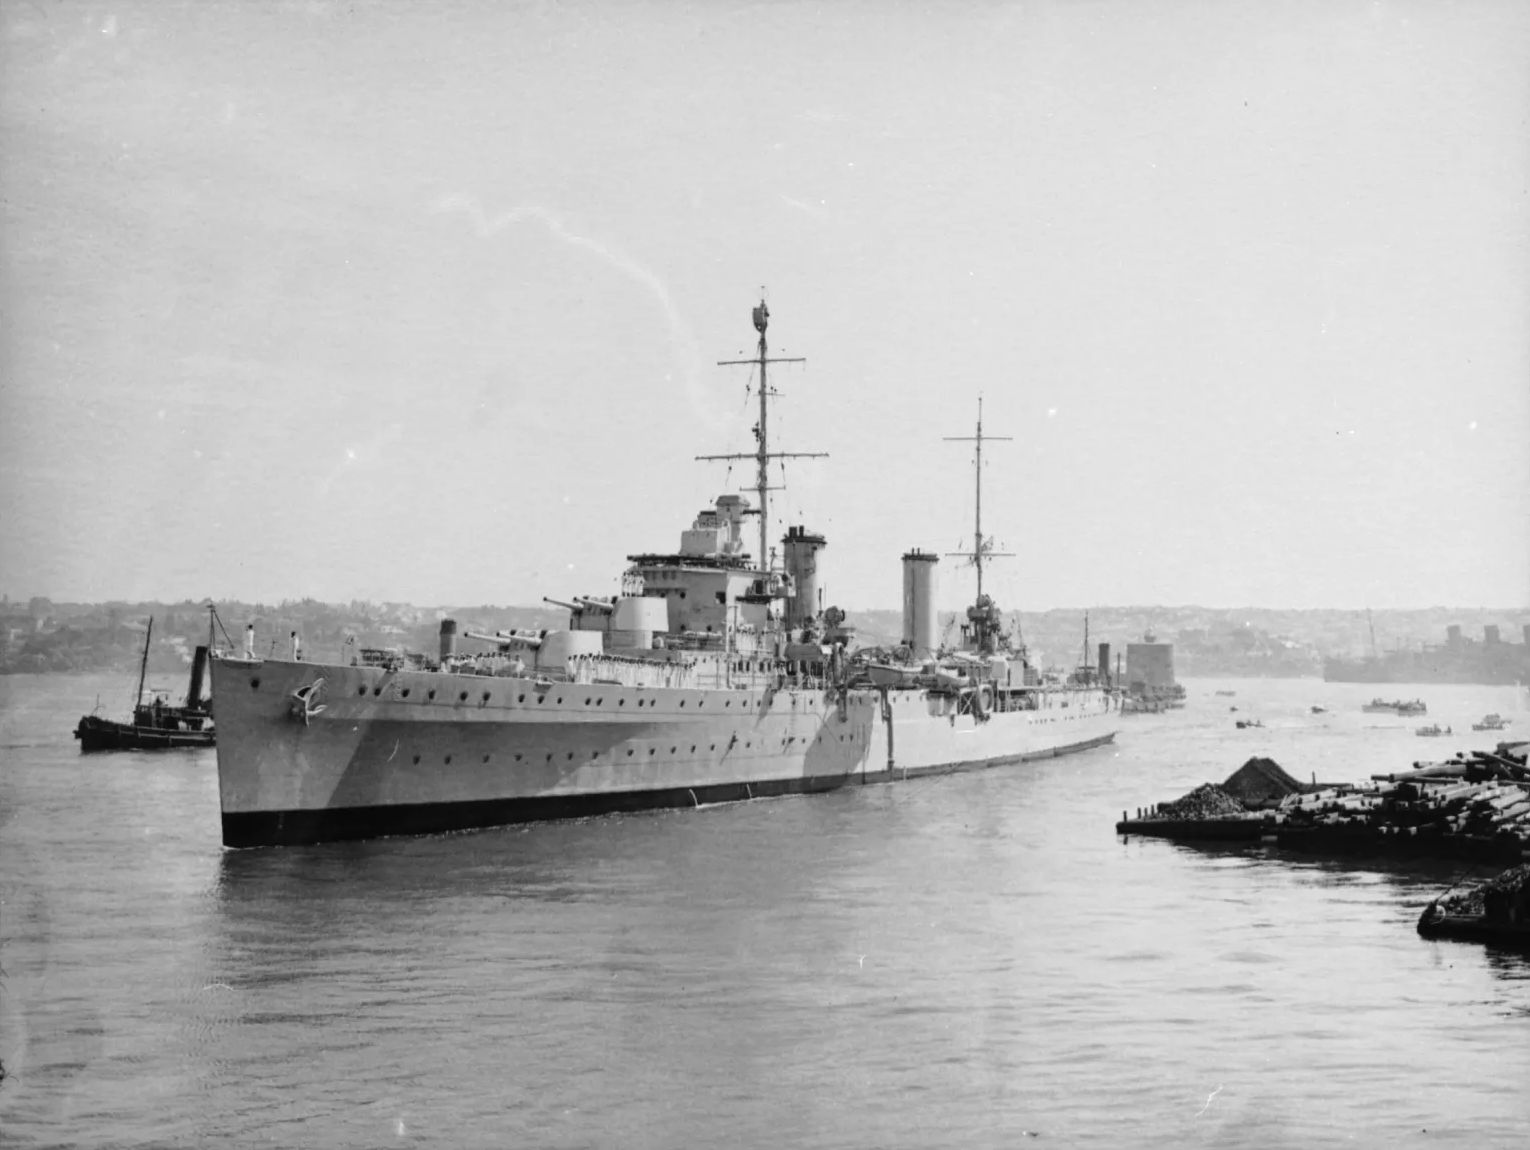 HMAS Perth light cruiser, 1940